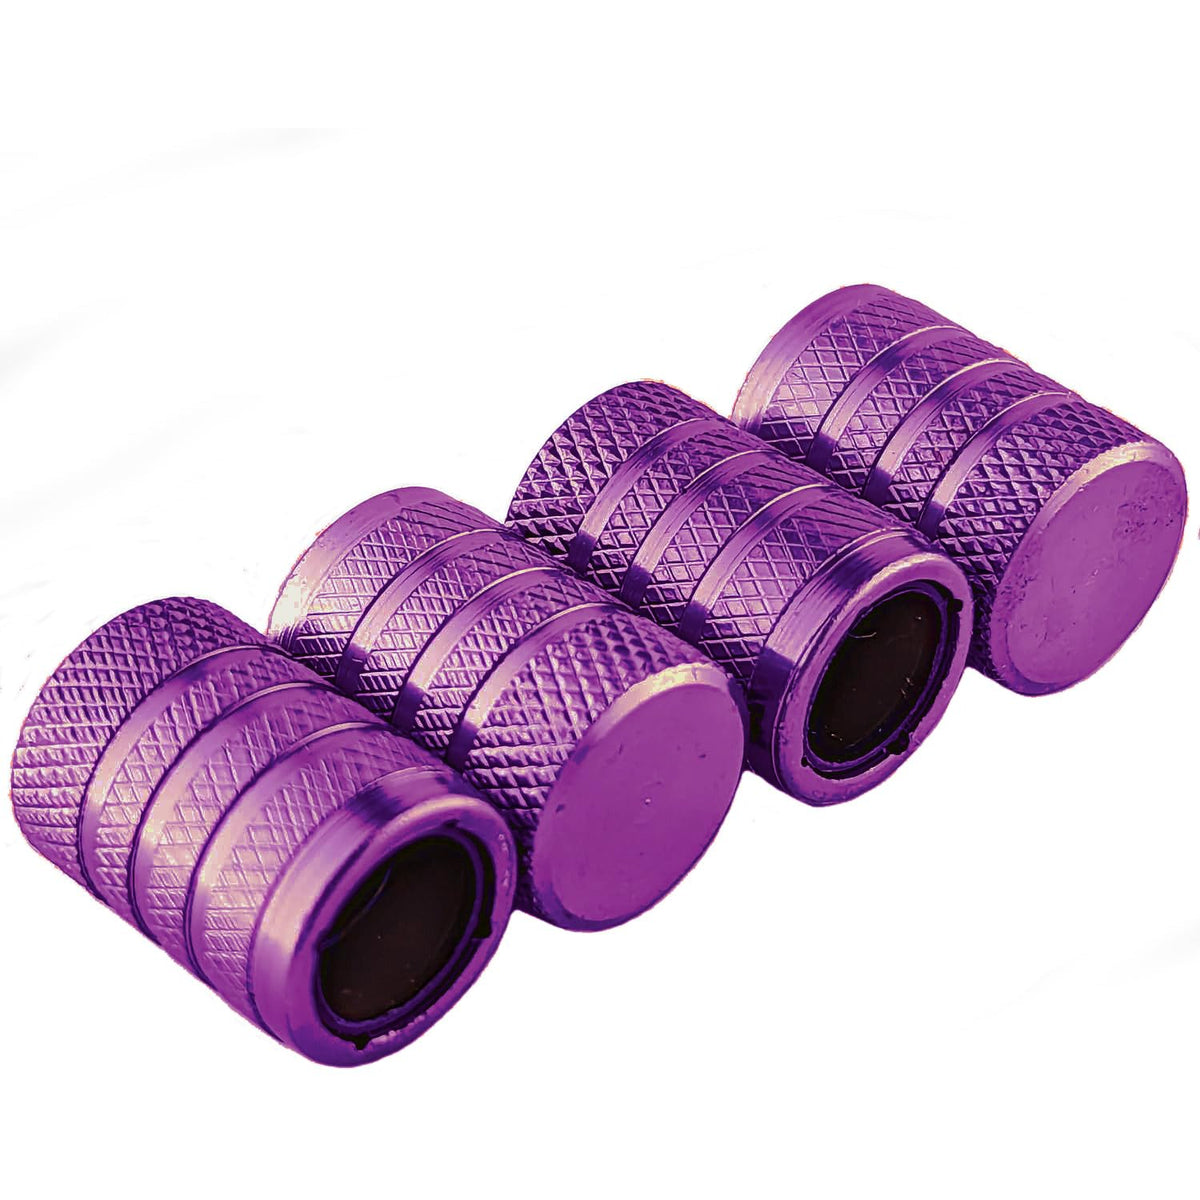 - 4 x Purple Barrel Dust Caps   Fit Onto Any Car, Push Bike Or Motorbike Valves